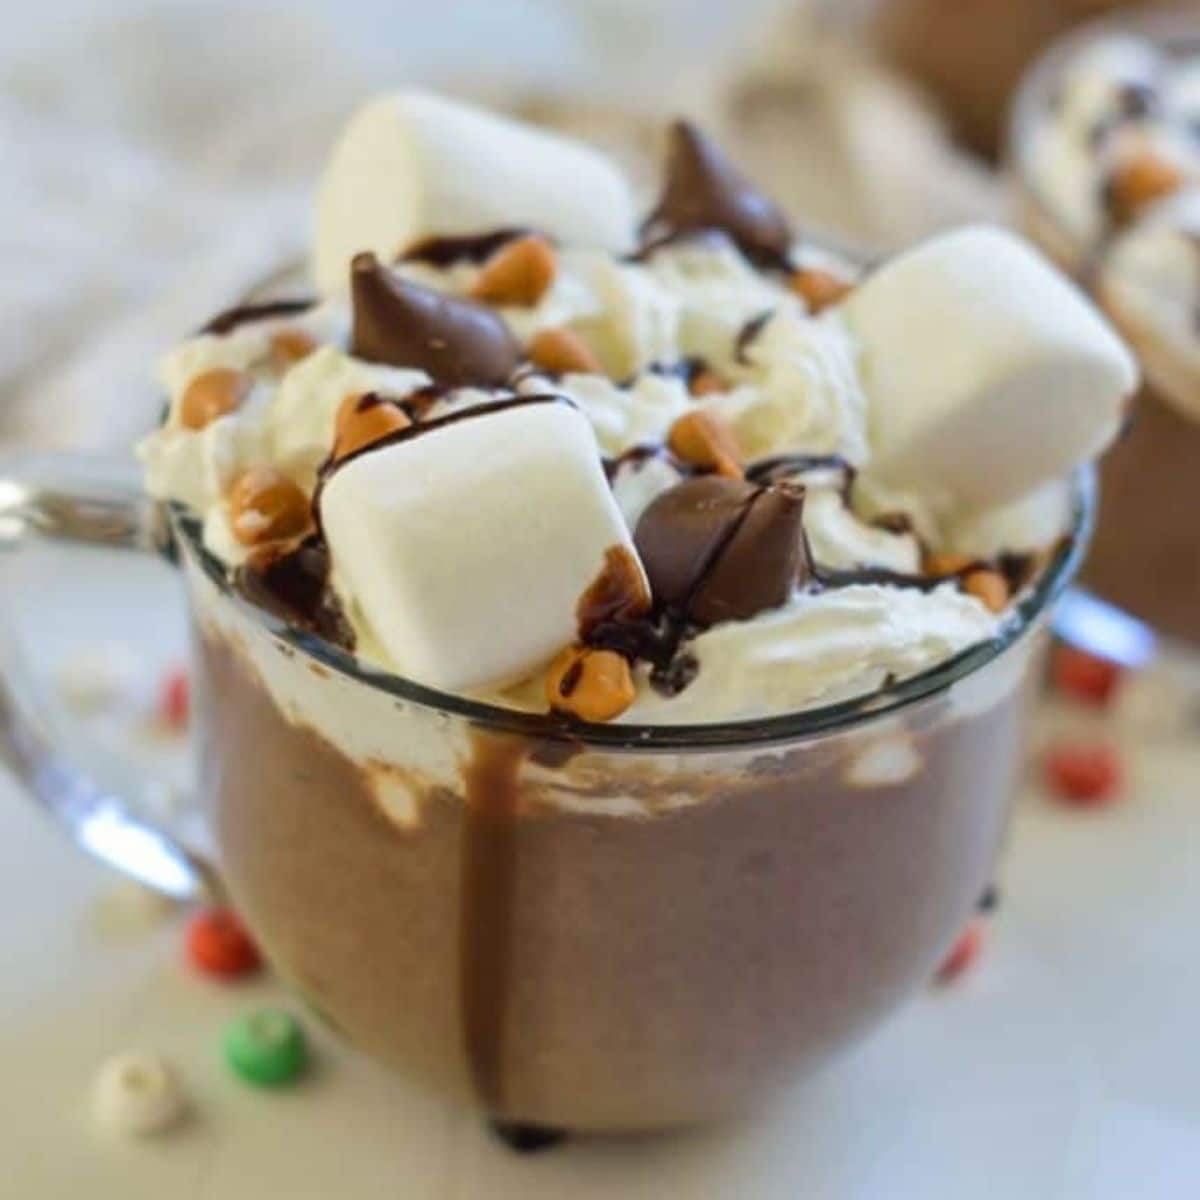 https://www.mydaintysoulcurry.com/wp-content/uploads/2020/02/instant-pot-hot-chocolate-featured.jpg